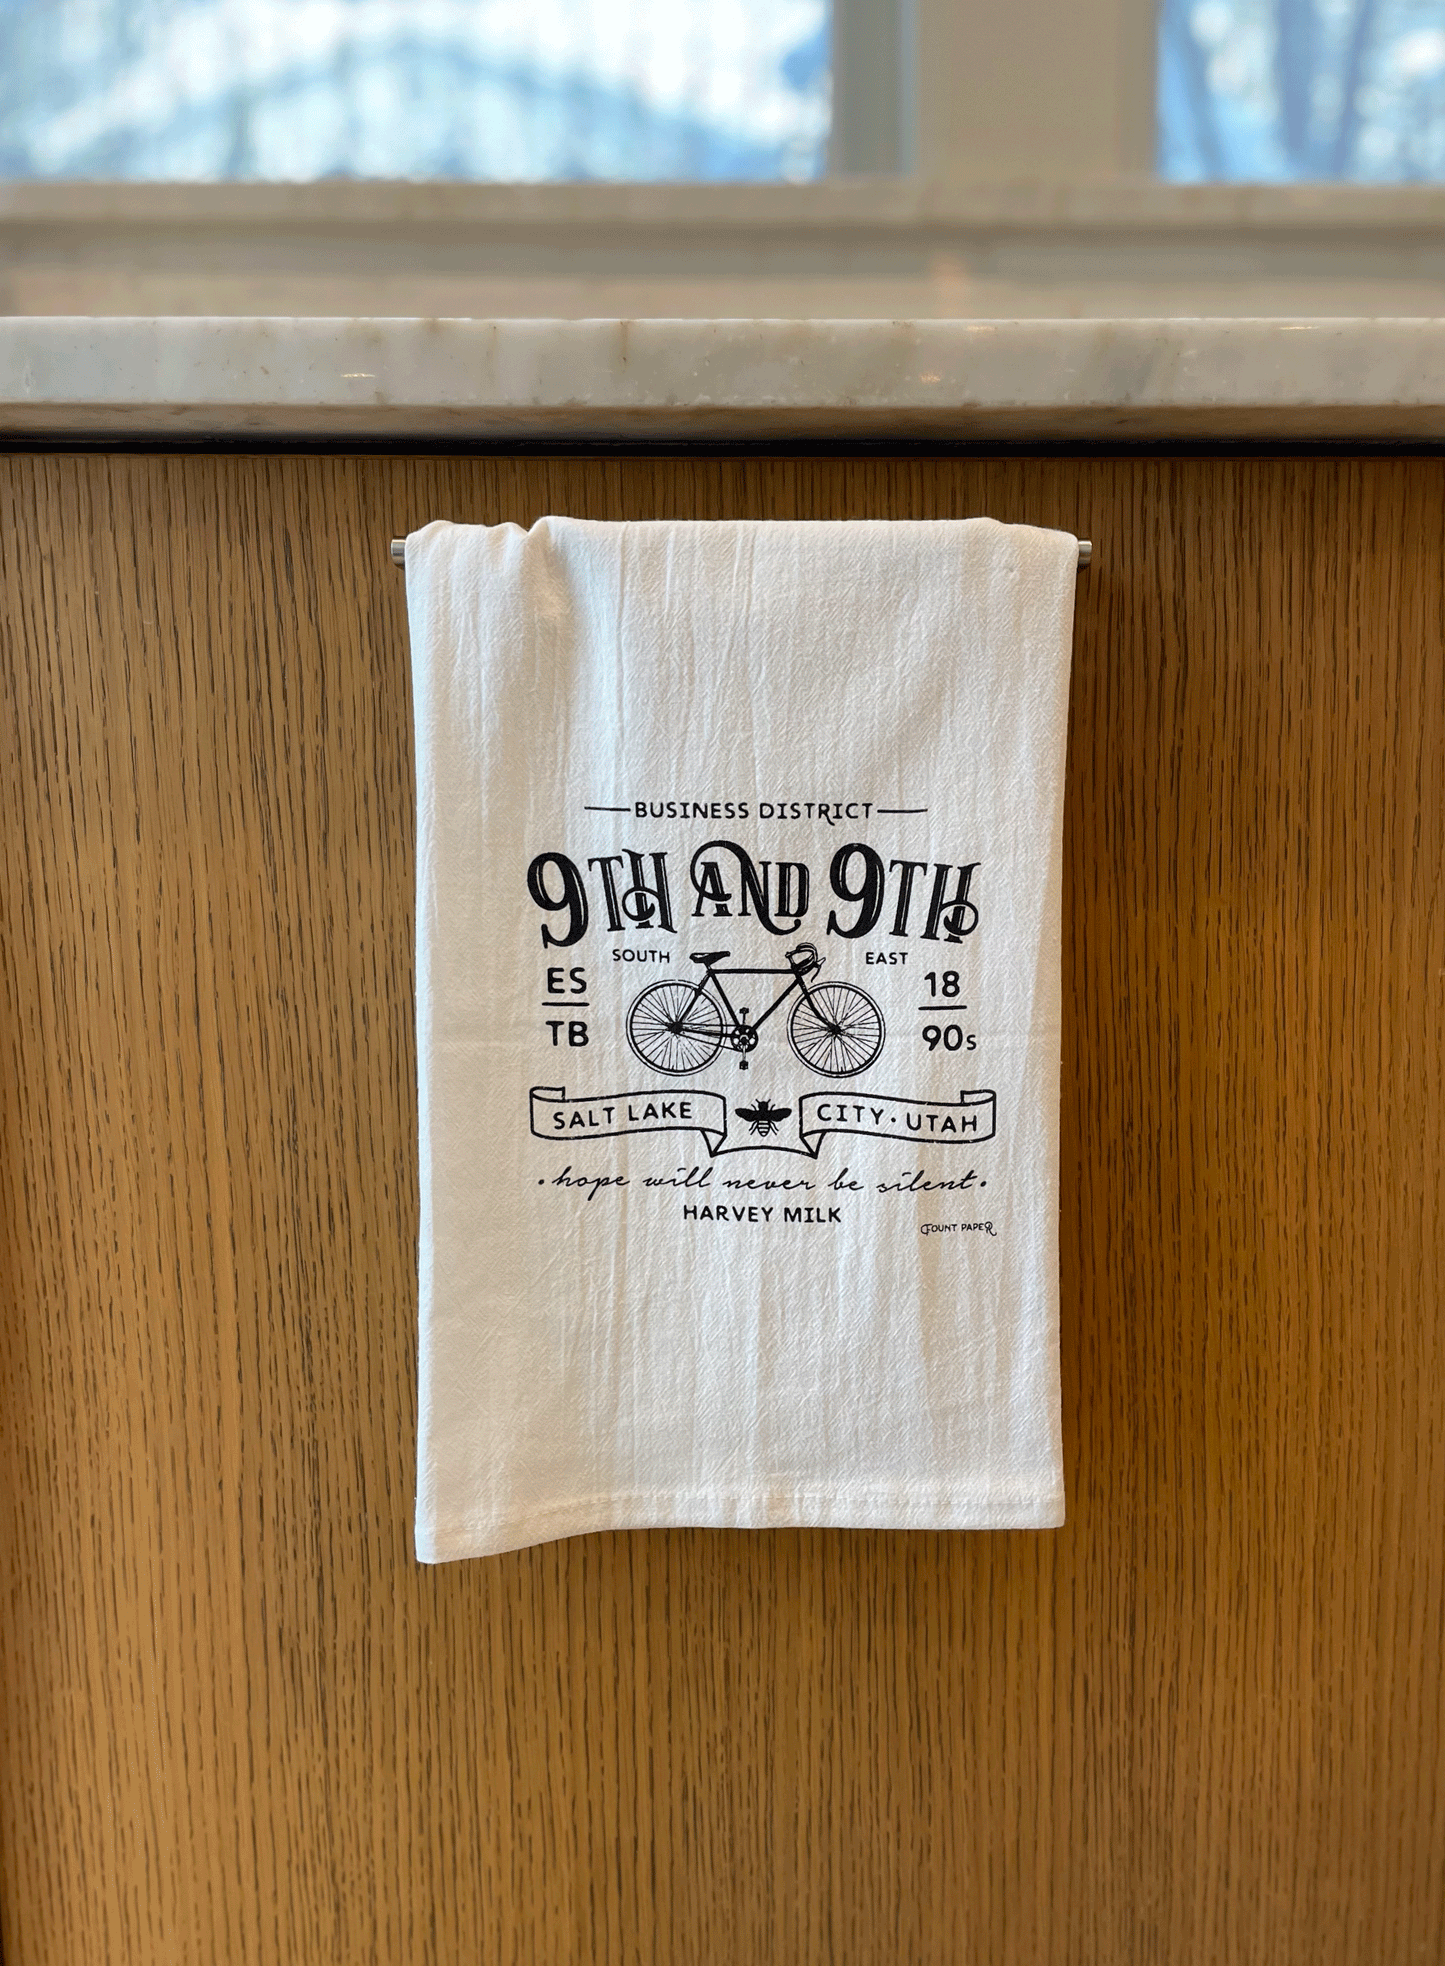 White cotton 9th and 9th Salt Lake City Utah tea towel hanging in kitchen